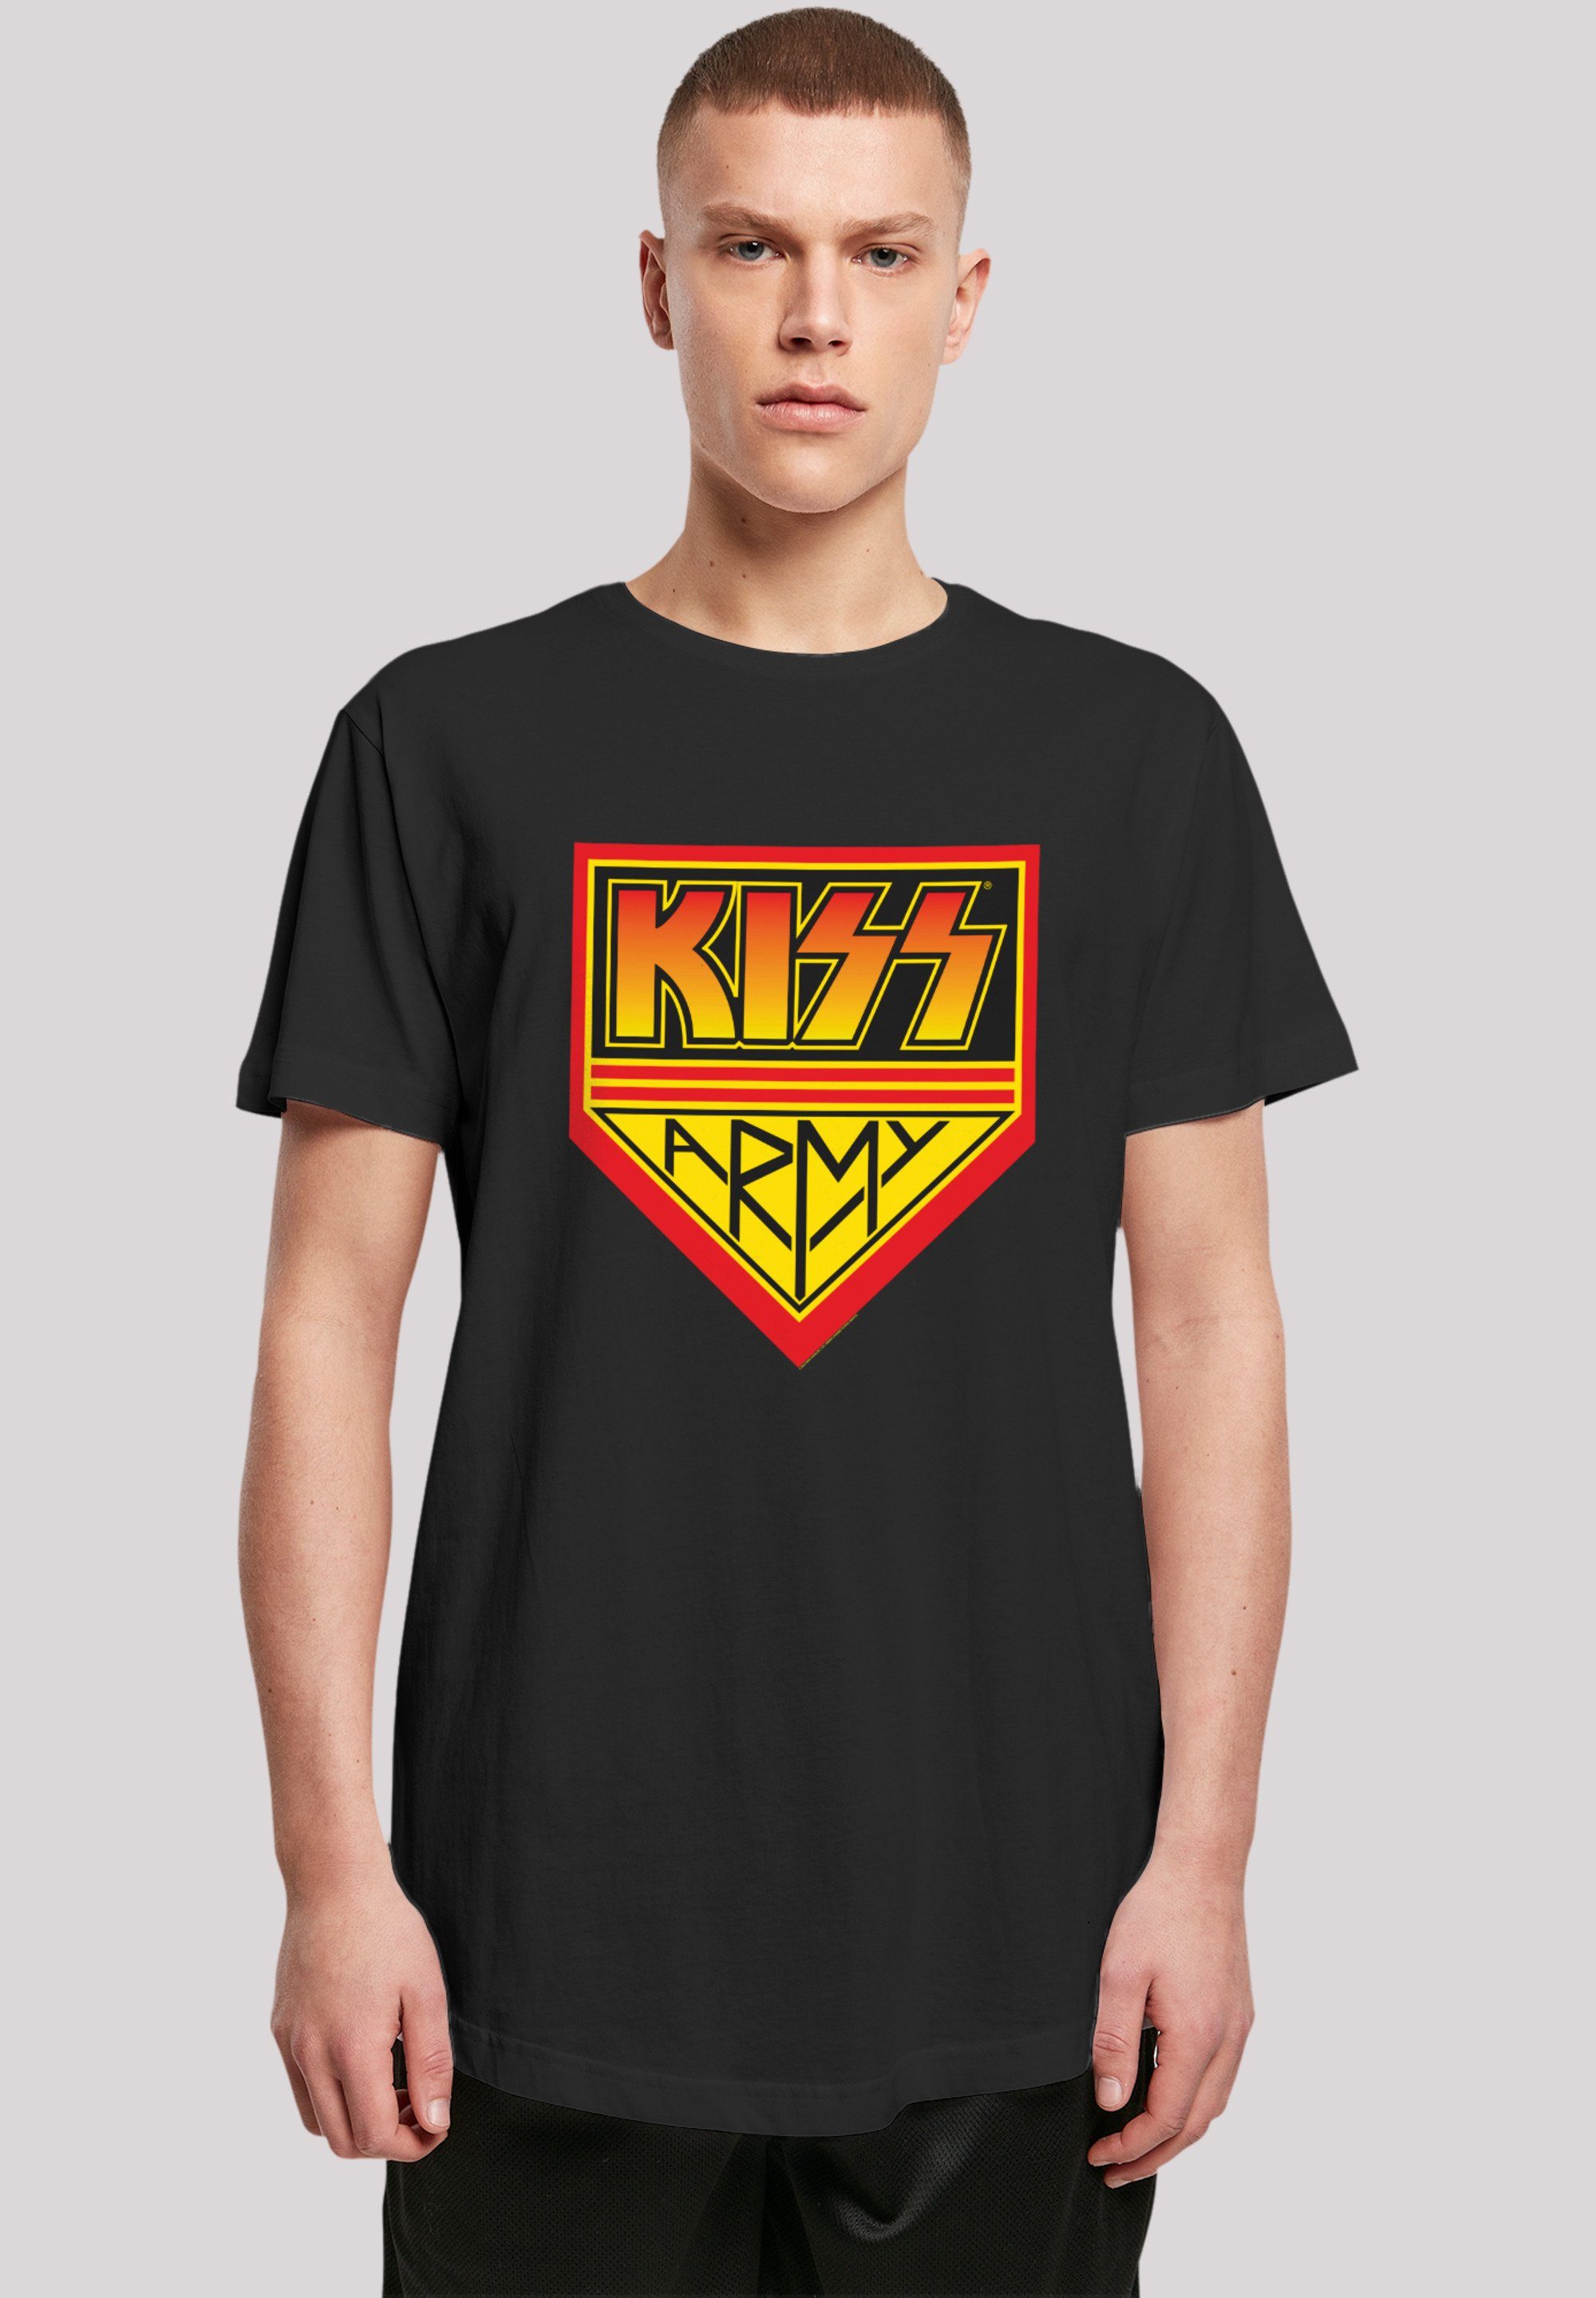 F4NT4STIC T-Shirt Kiss Rock Band Army Logo Premium Qualität, Musik, By Rock Off schwarz